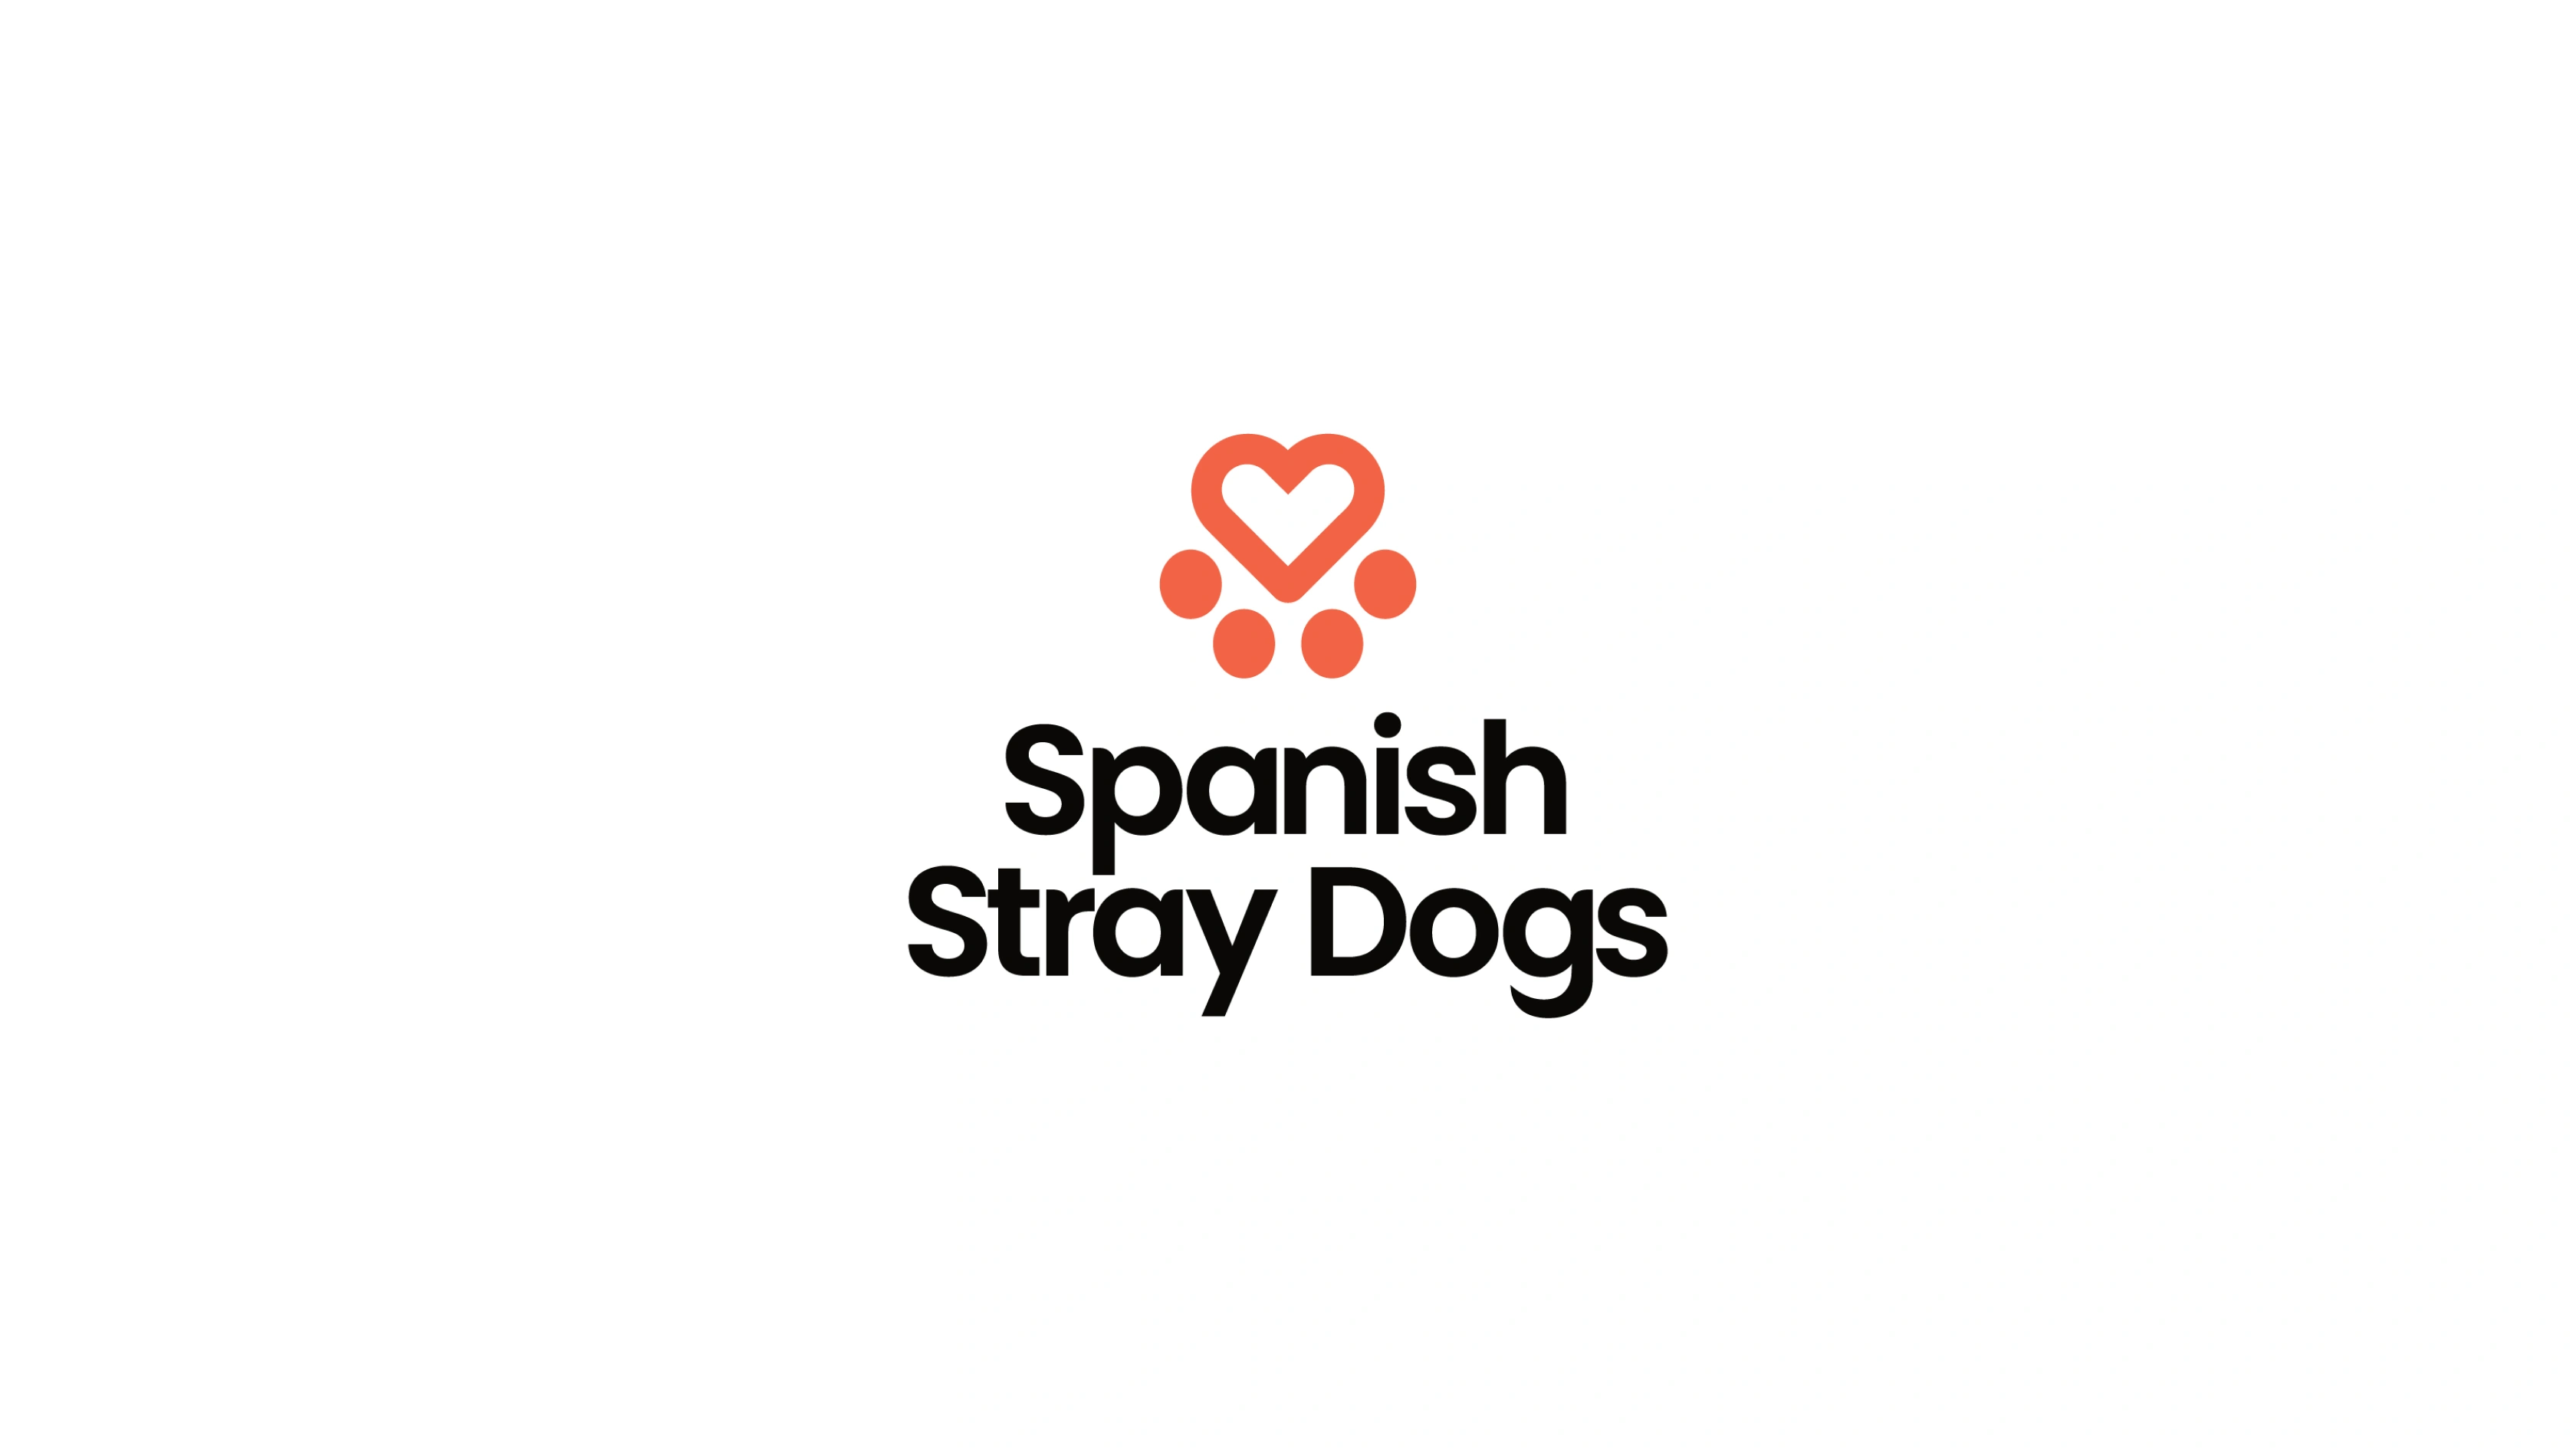 Spanish Stray Dogs logo